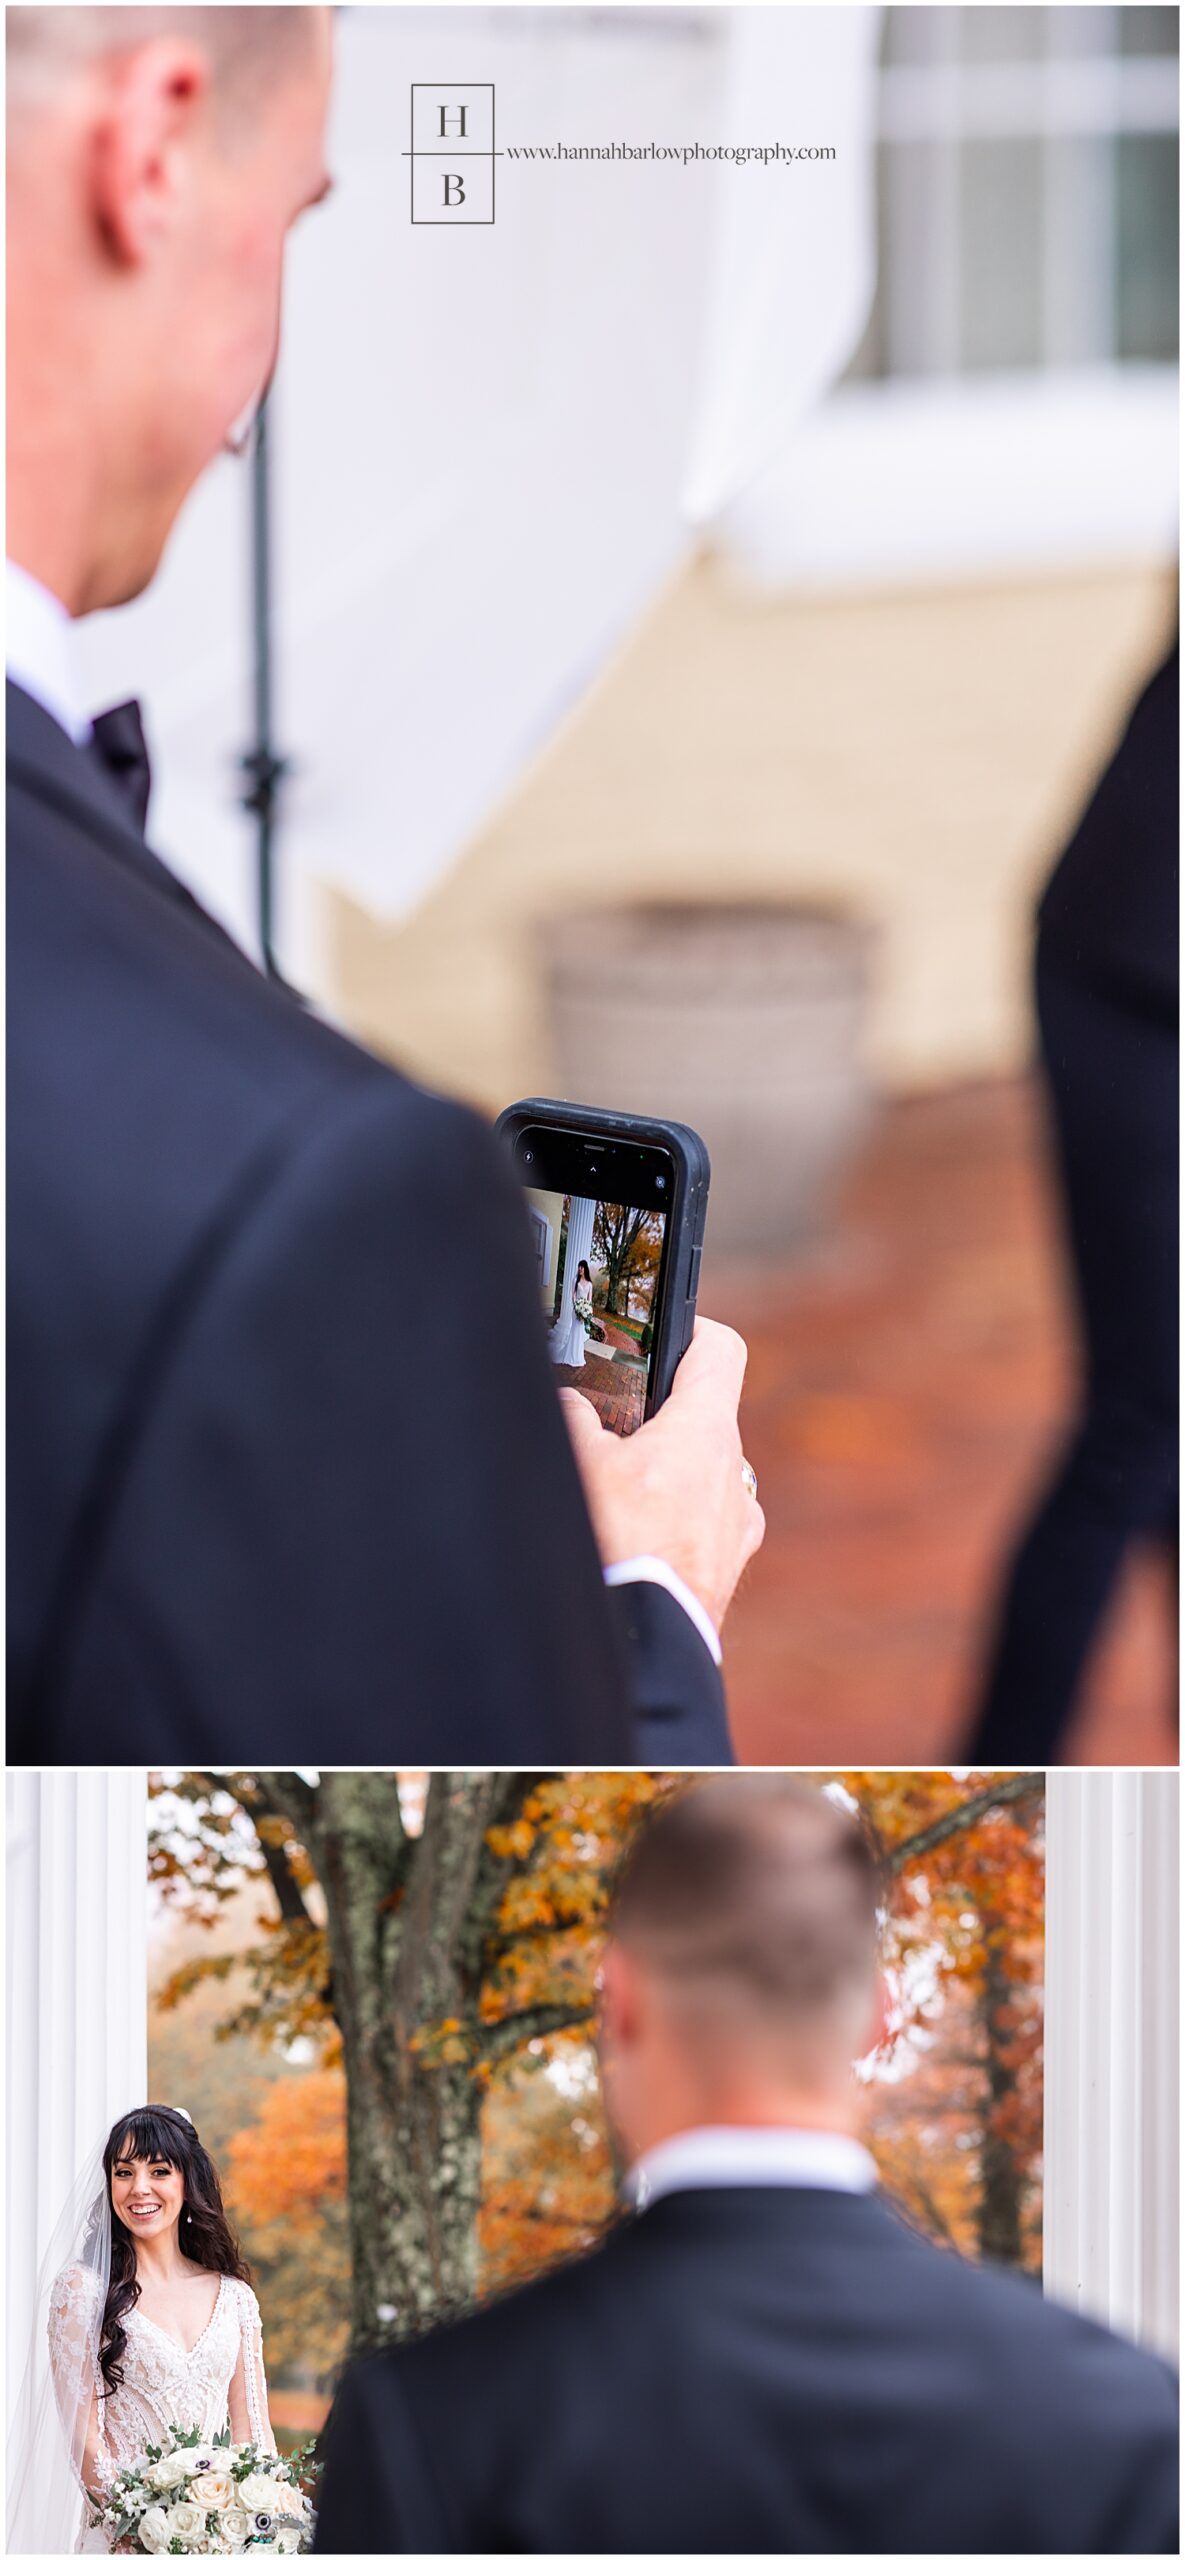 Groom takes photos on his phone of bride posing